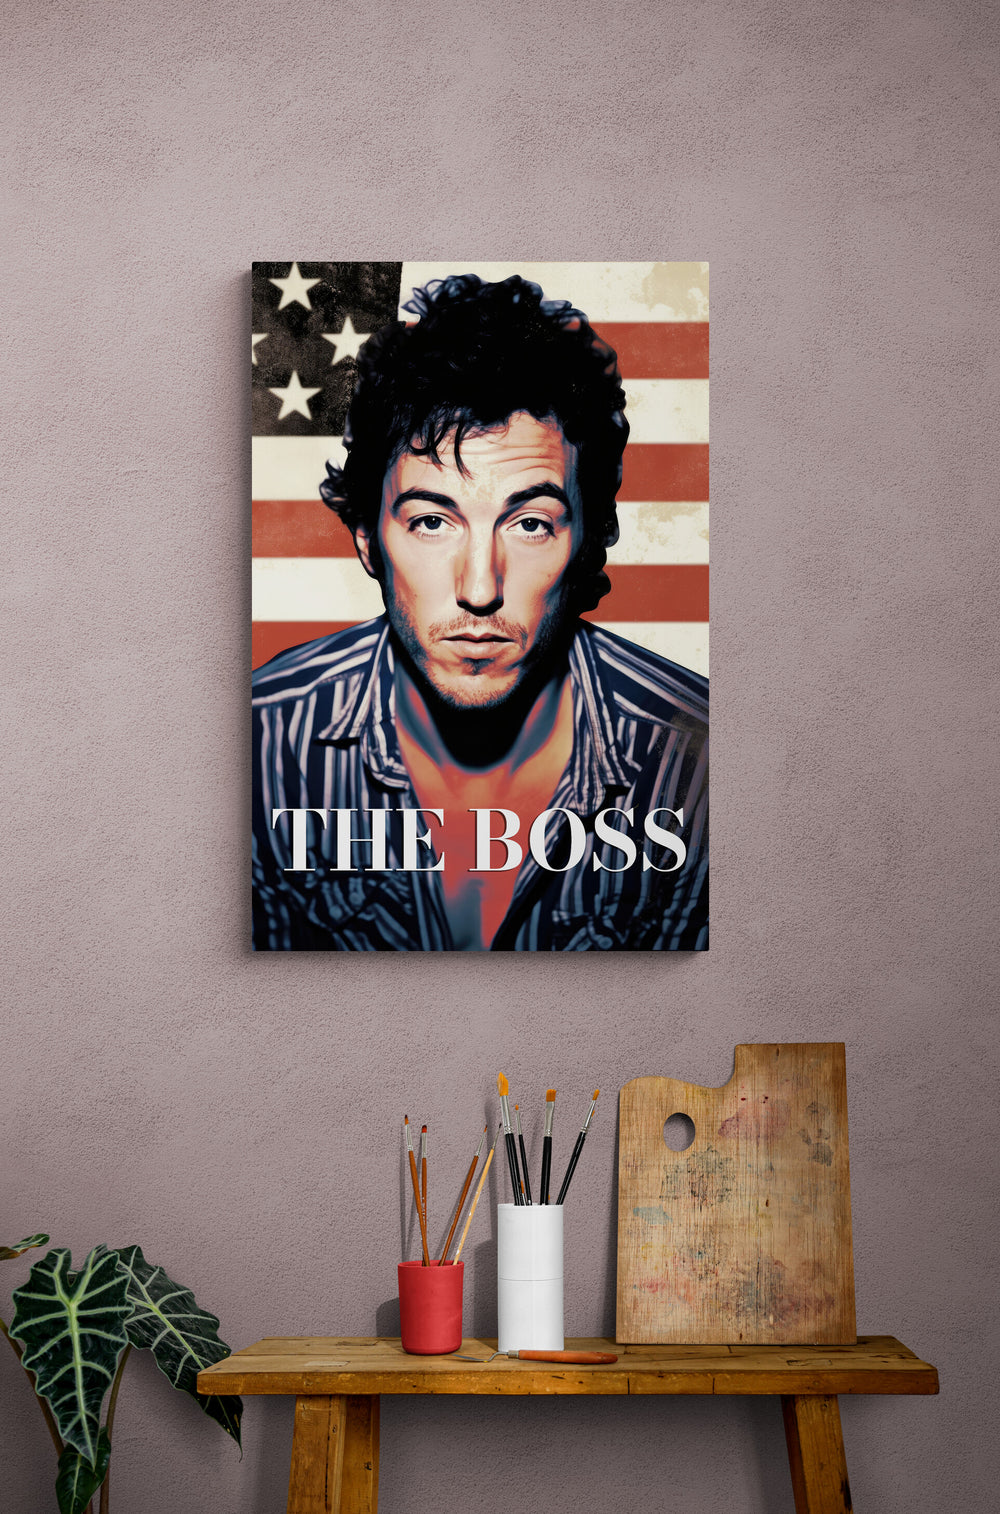 Springsteen "The Boss"